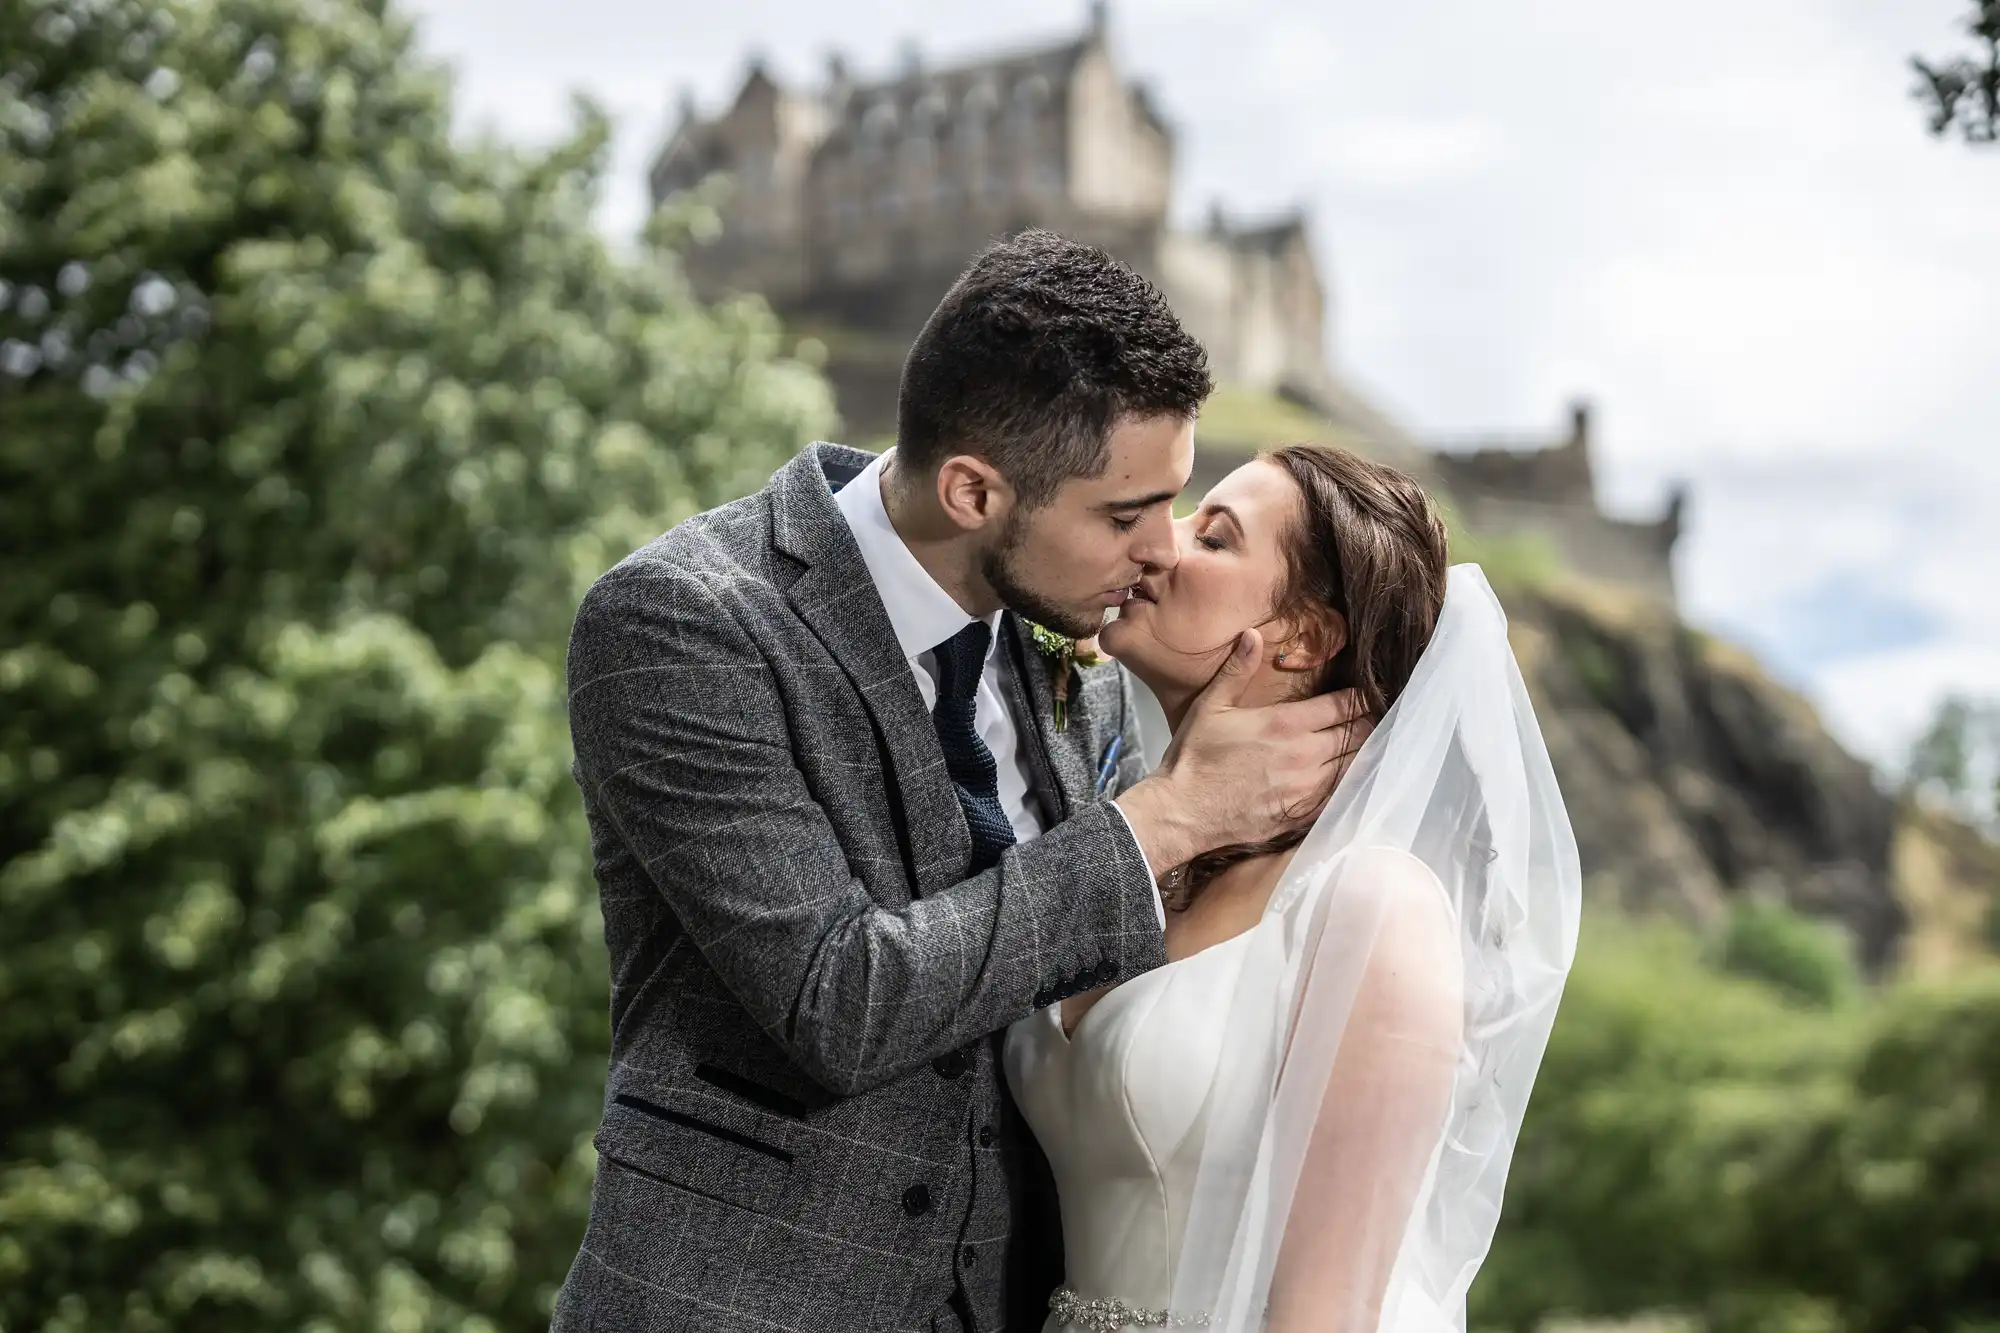 Caledonian Hotel wedding – Keeley and Attilio’s beautiful photos